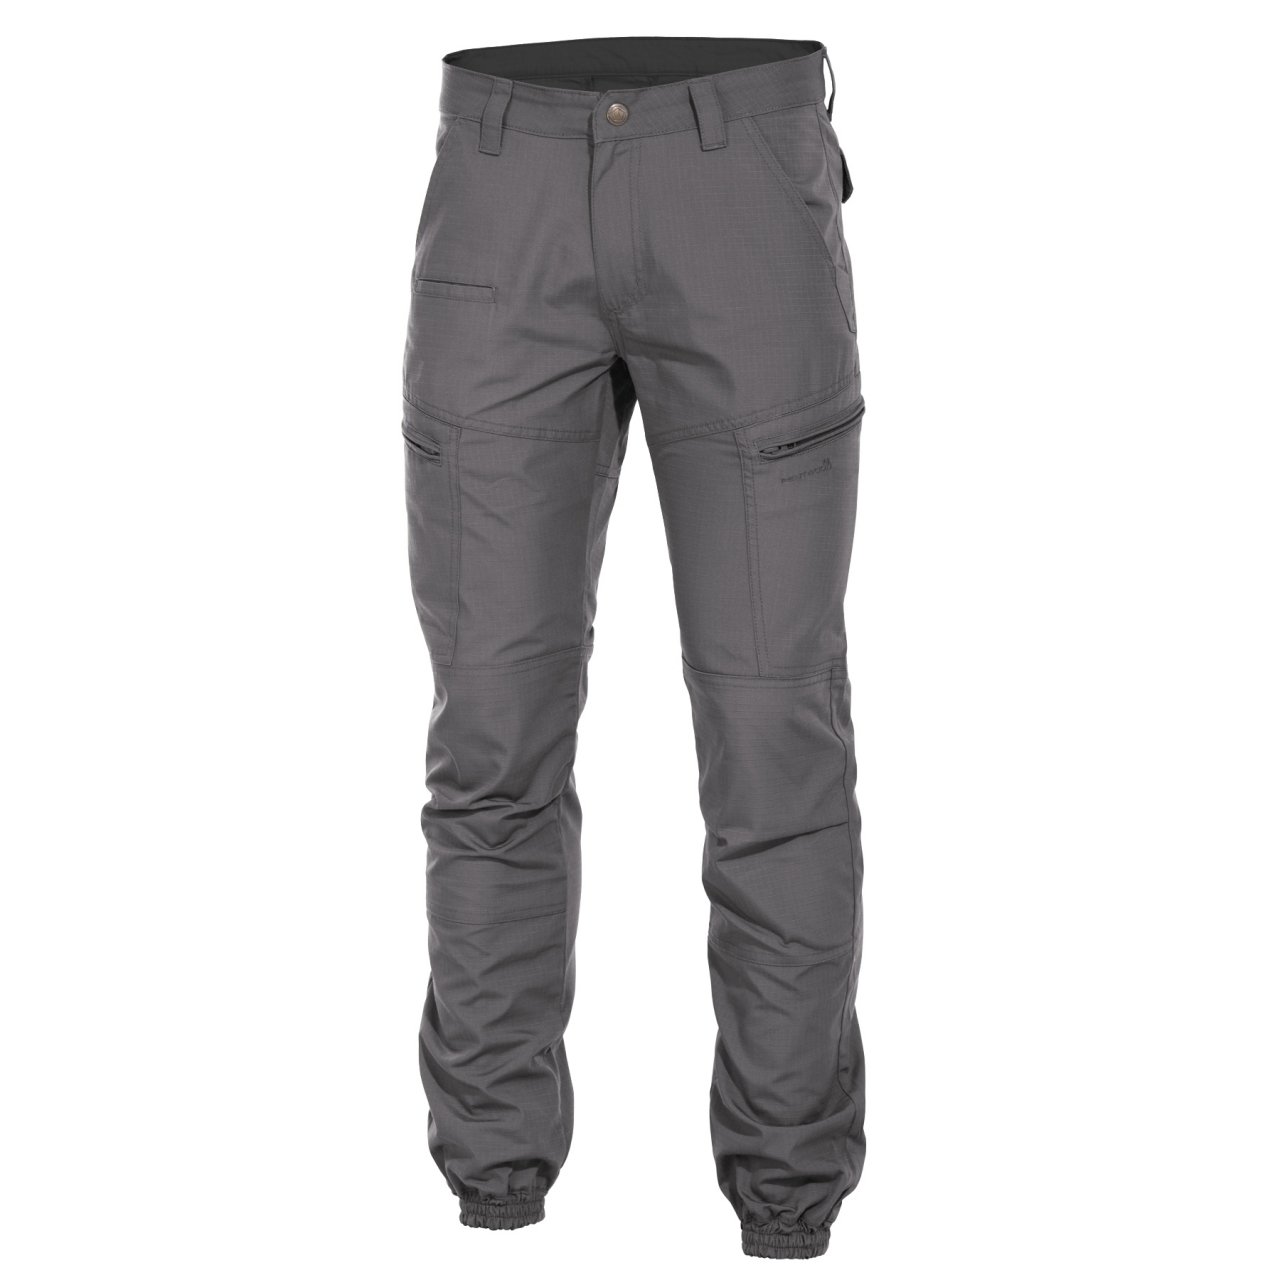 Kalhoty Pentagon Ypero - antracitové, 52 XL